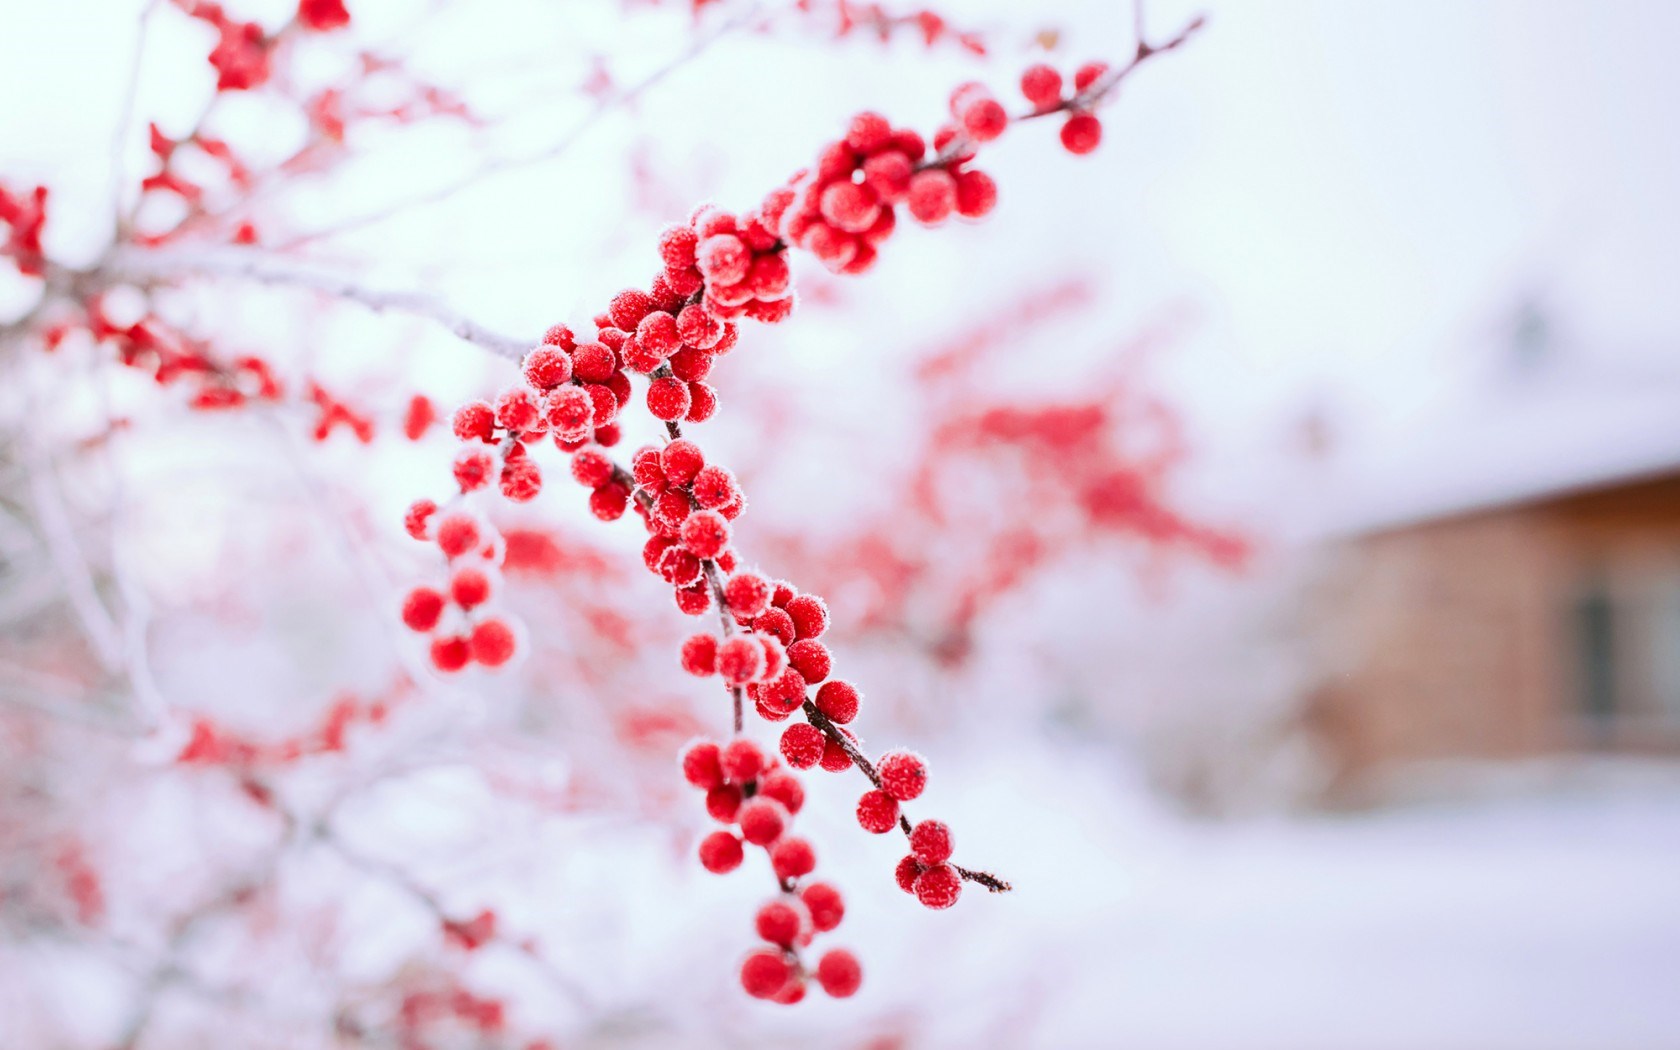 Red Berries Winter Nature